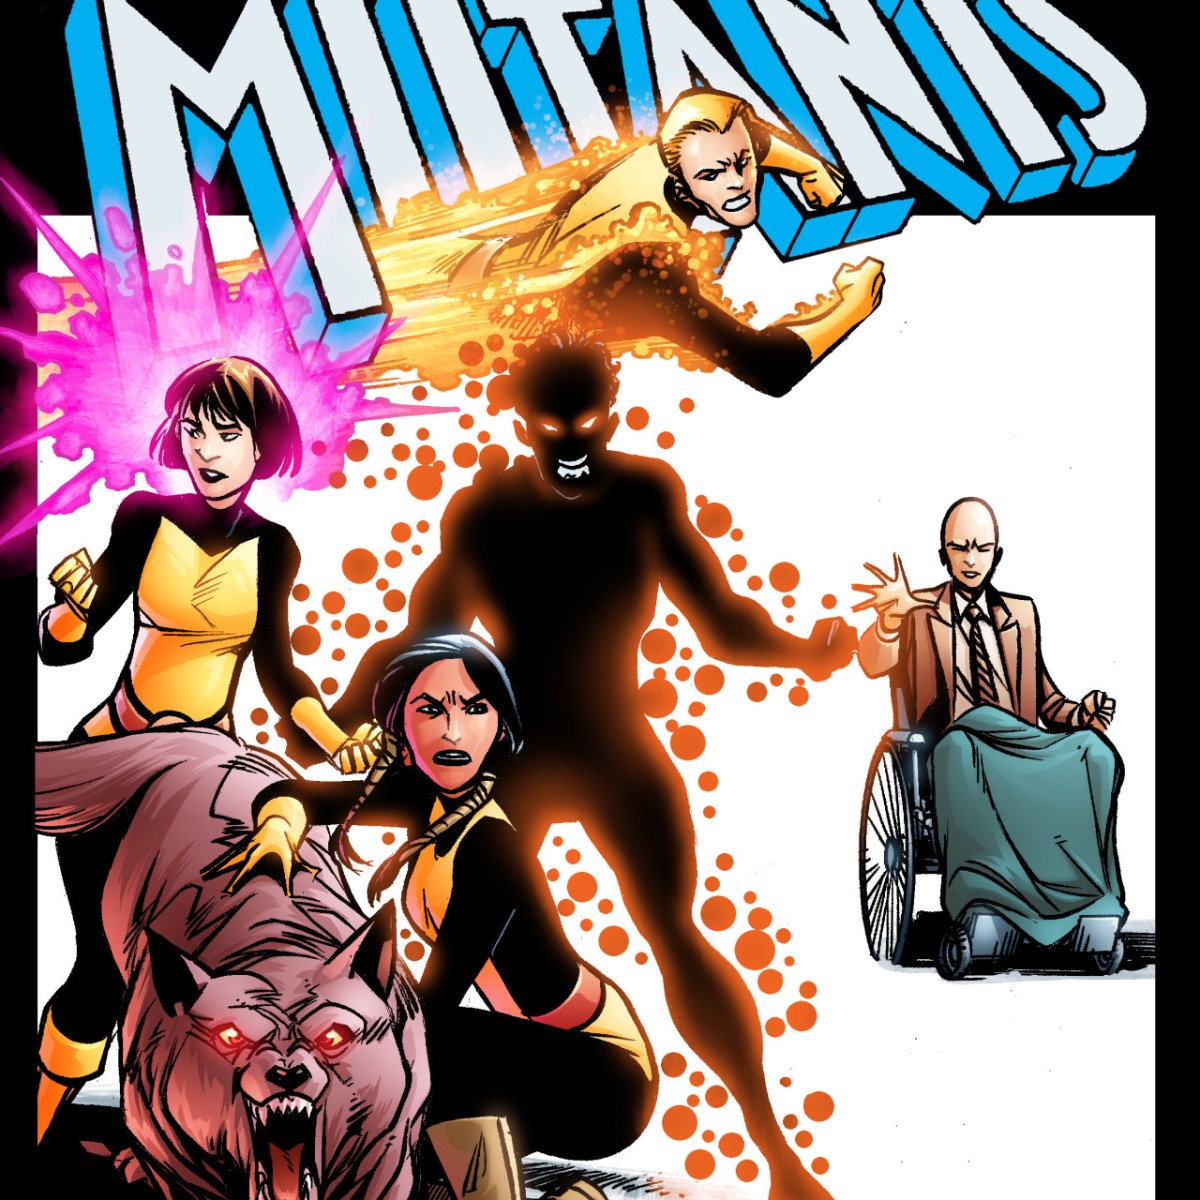 New Mutants anniversary – Comic cover remake